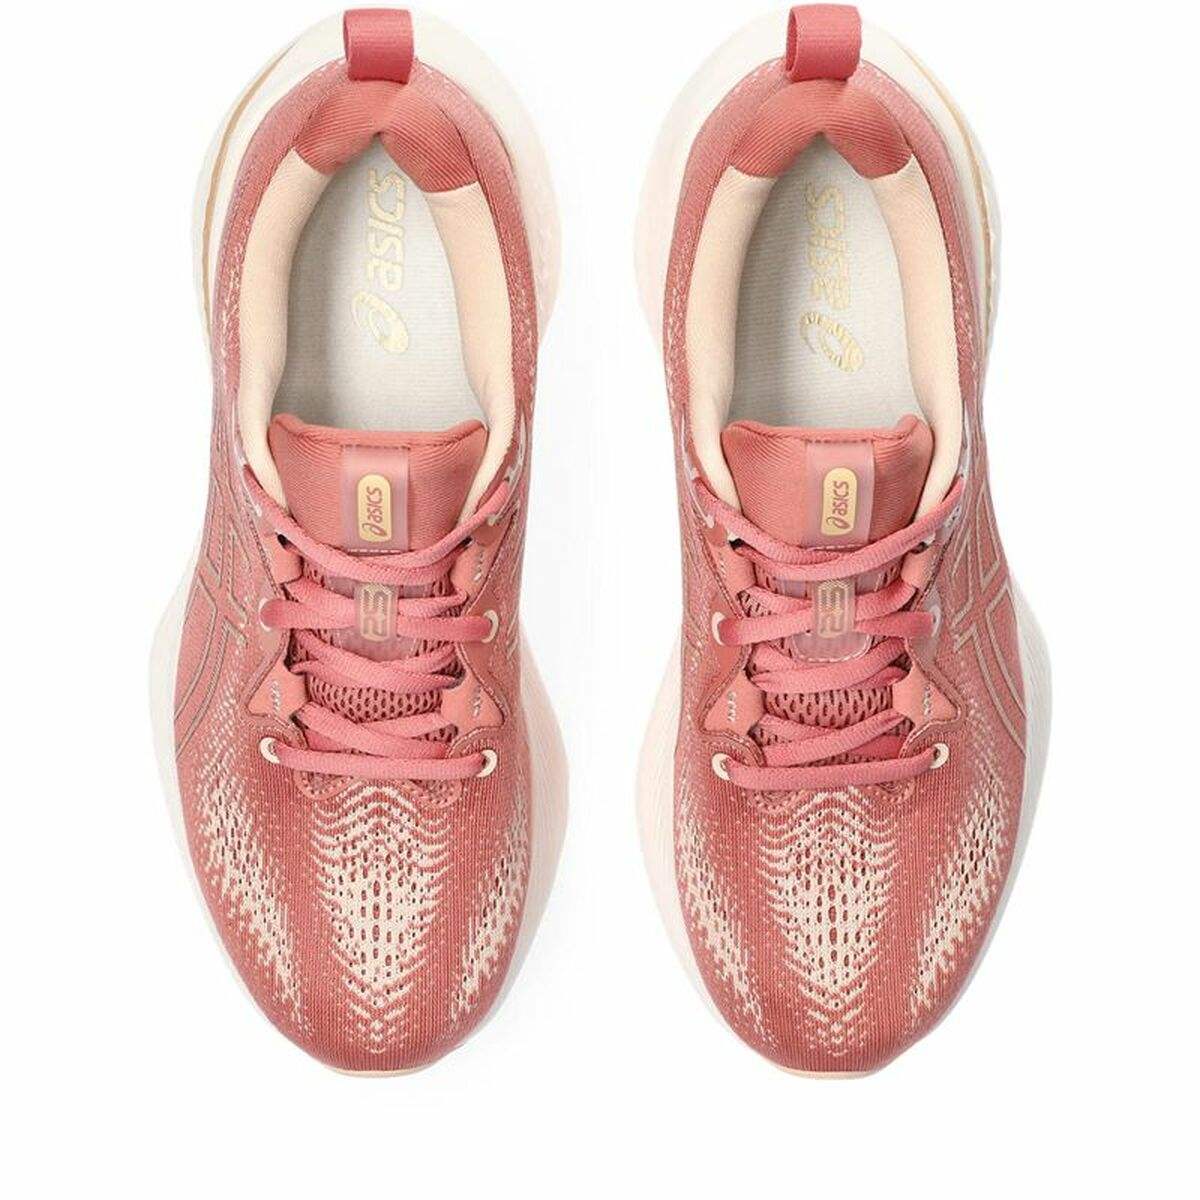 Chaussures de Running pour Adultes Asics Gel-Cumulus 25 Light Femme Saumon - Asics - Jardin D'Eyden - jardindeyden.fr